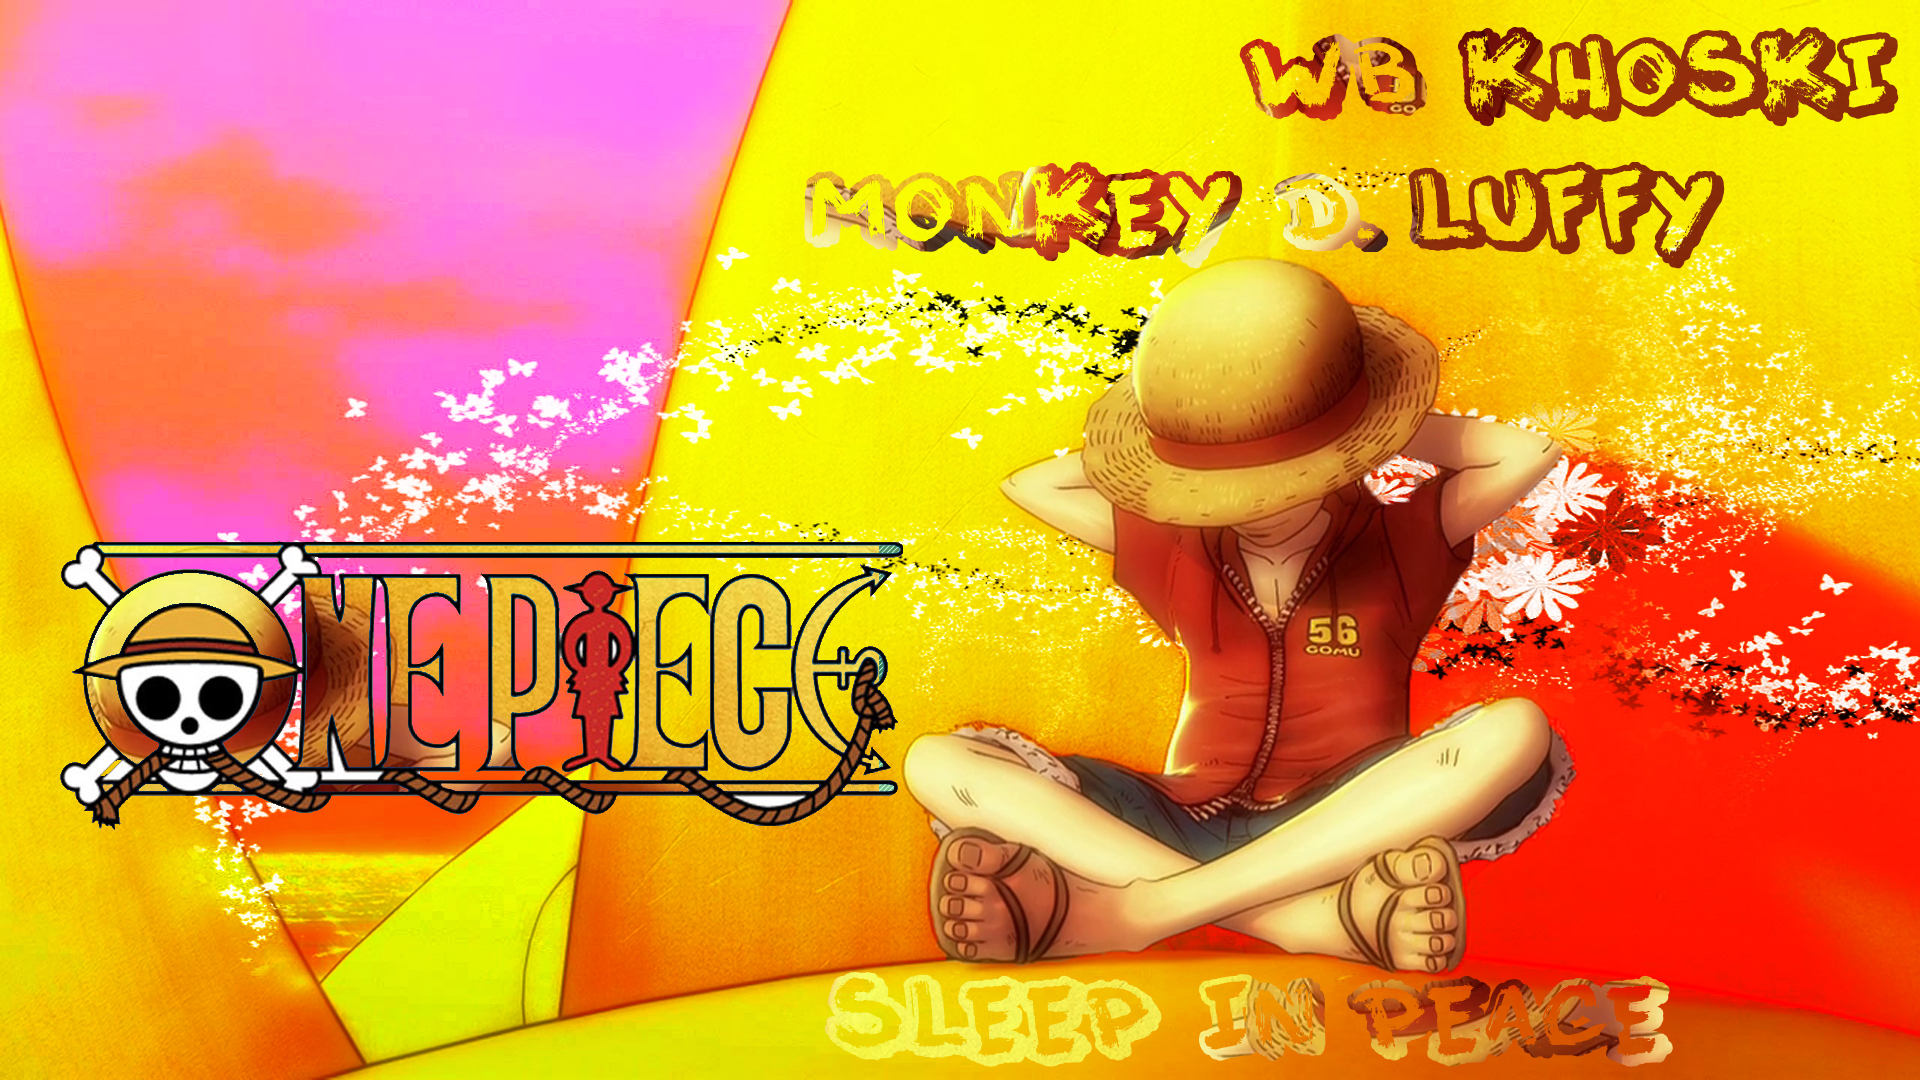 Descarga gratuita de fondo de pantalla para móvil de Dormido, Monkey D Luffy, One Piece, Animado.